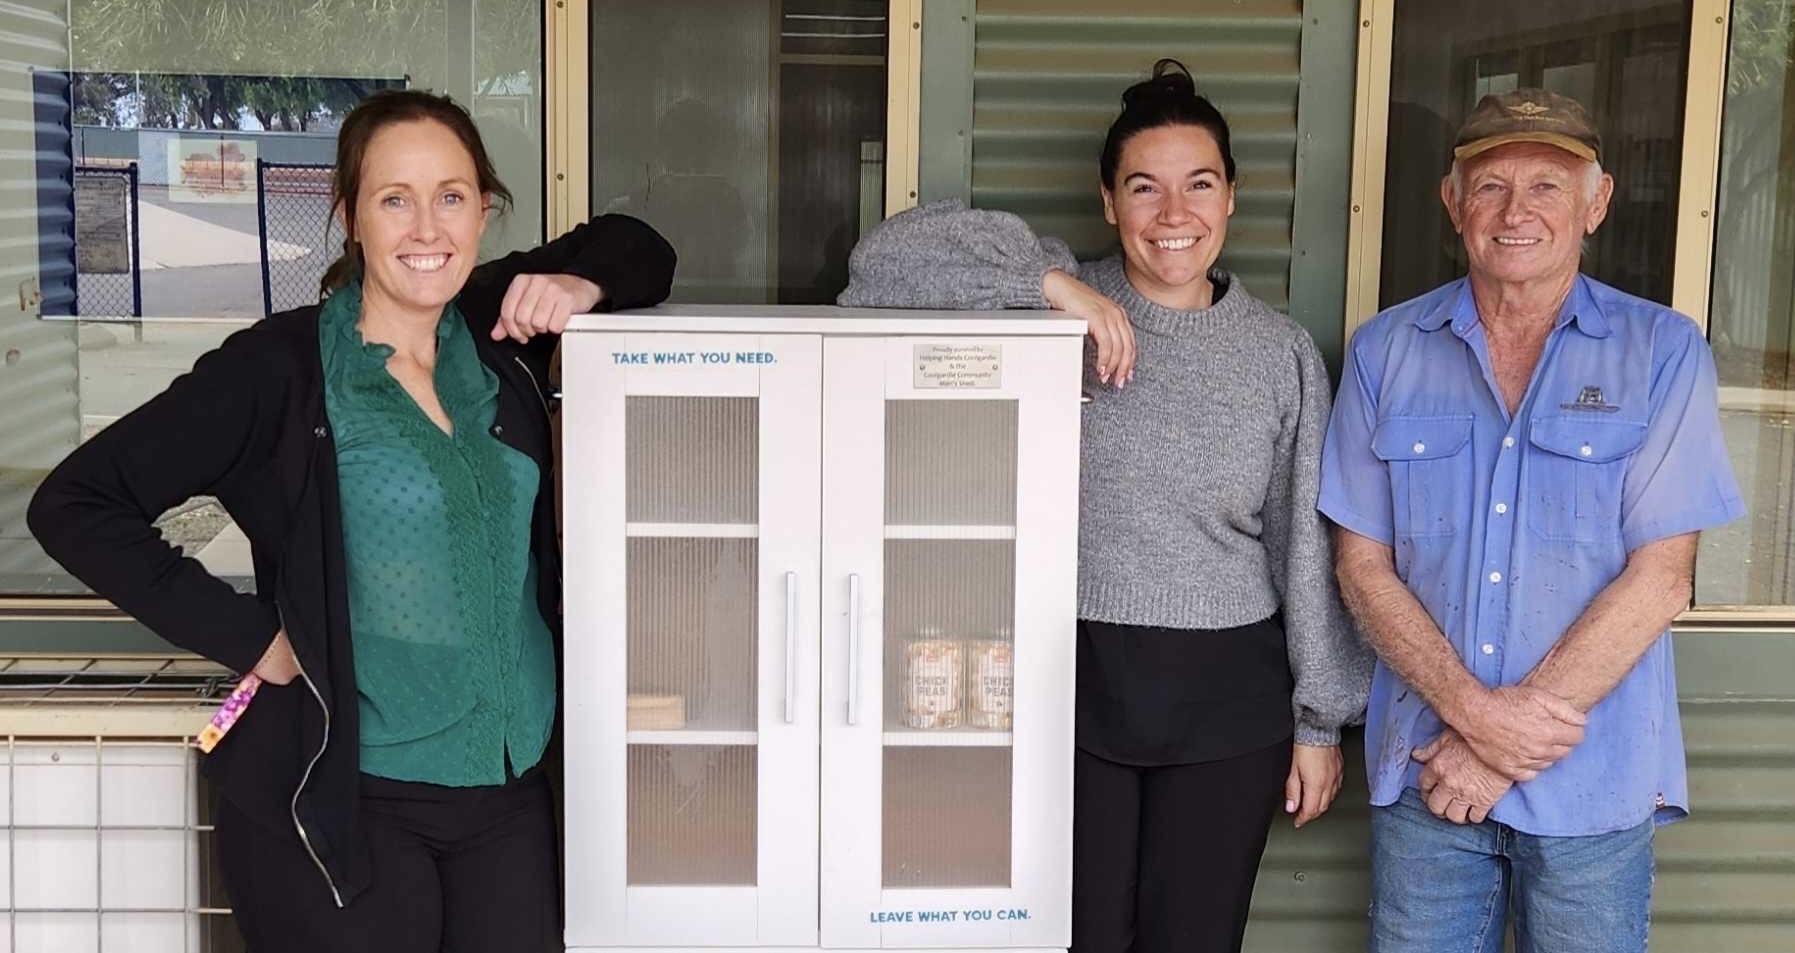 Coolgardie's Community Spirit Shines with New Food Pantry Initiative